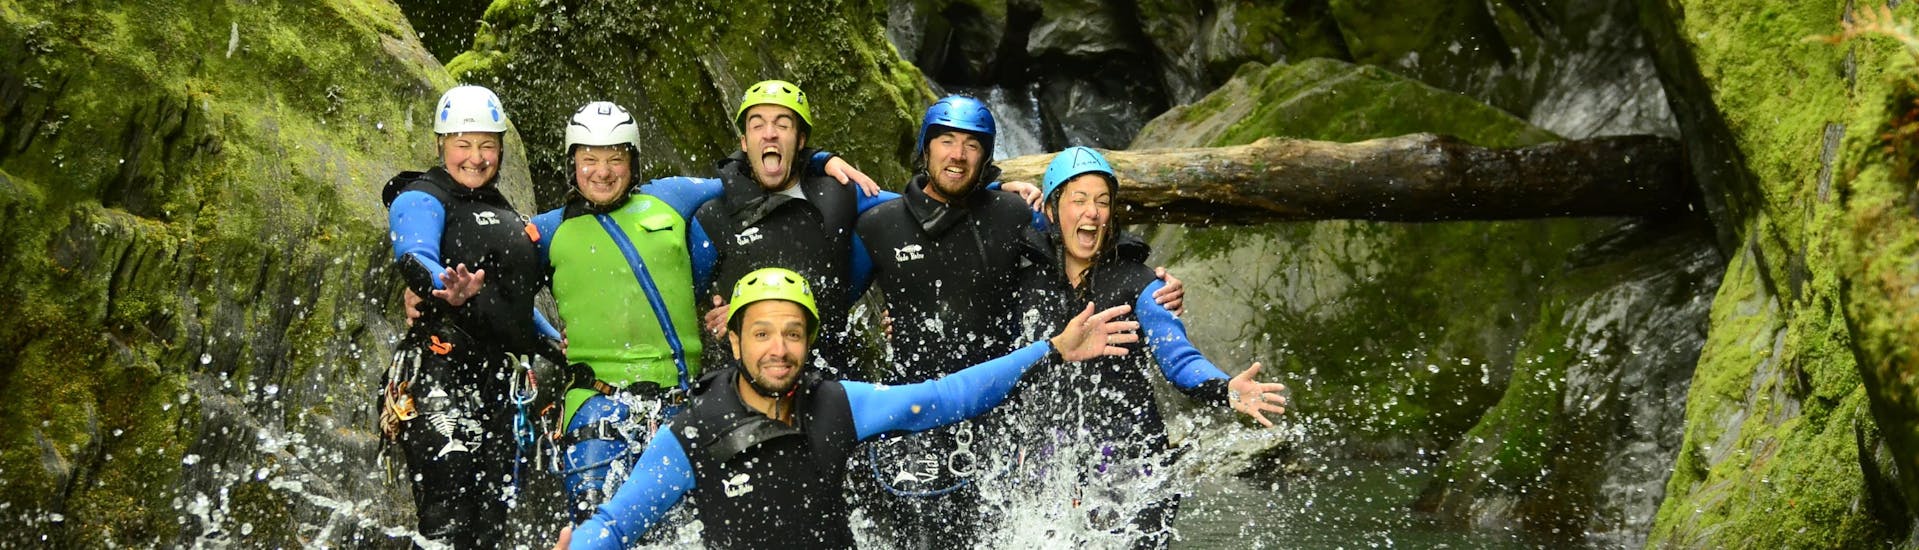 Group of adventurers having fun at Canyoning from Wanaka at Mount Aspiring - Full Day with Canyoning New Zealand.